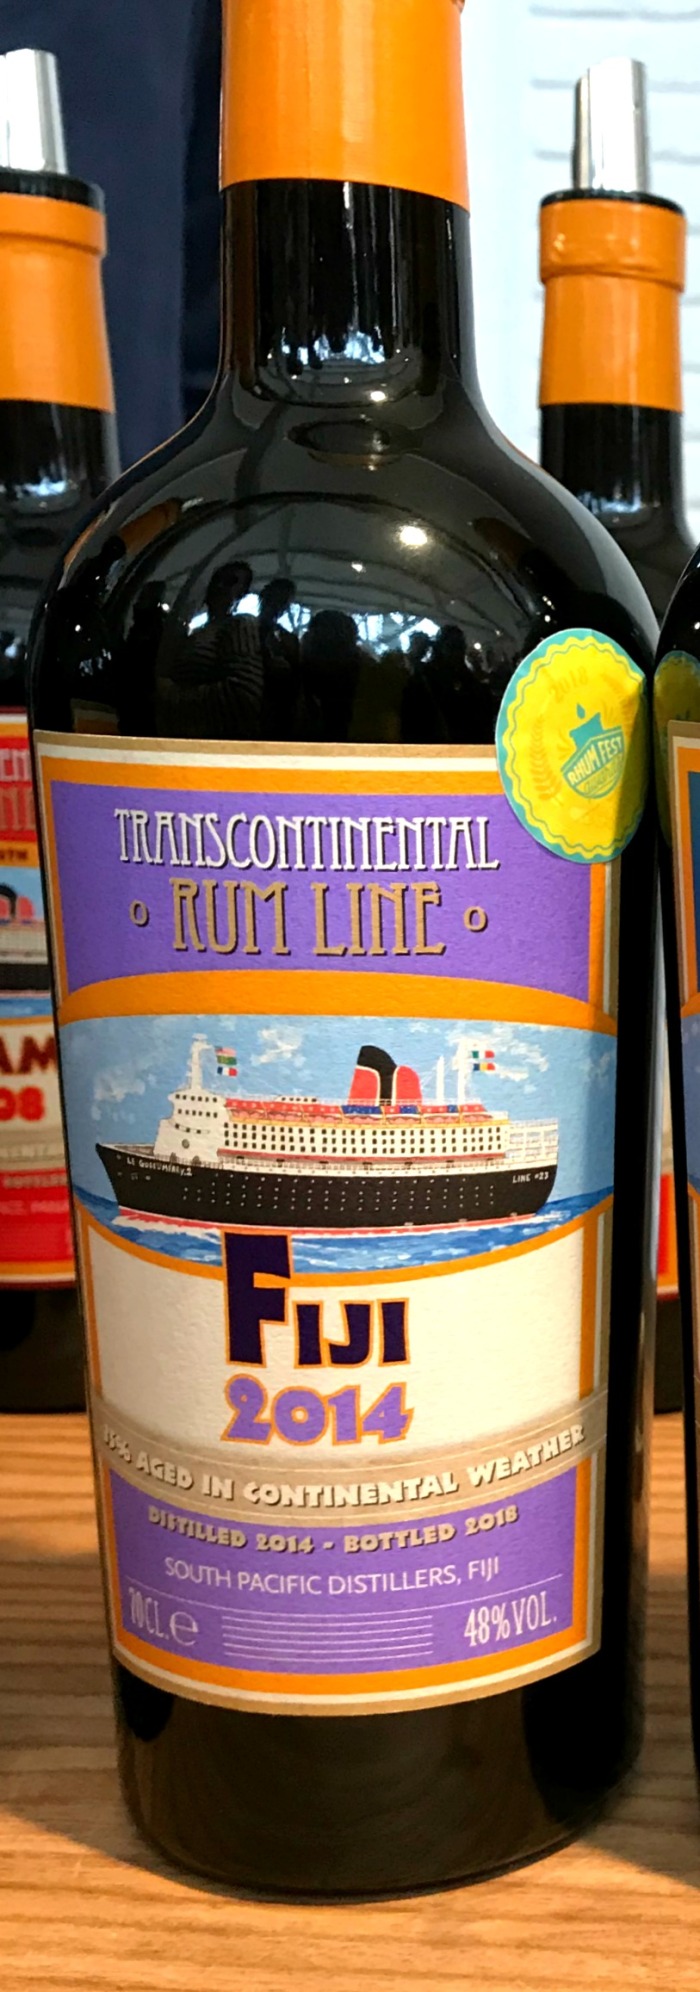 Transcontinental rum Line Fiji 2014